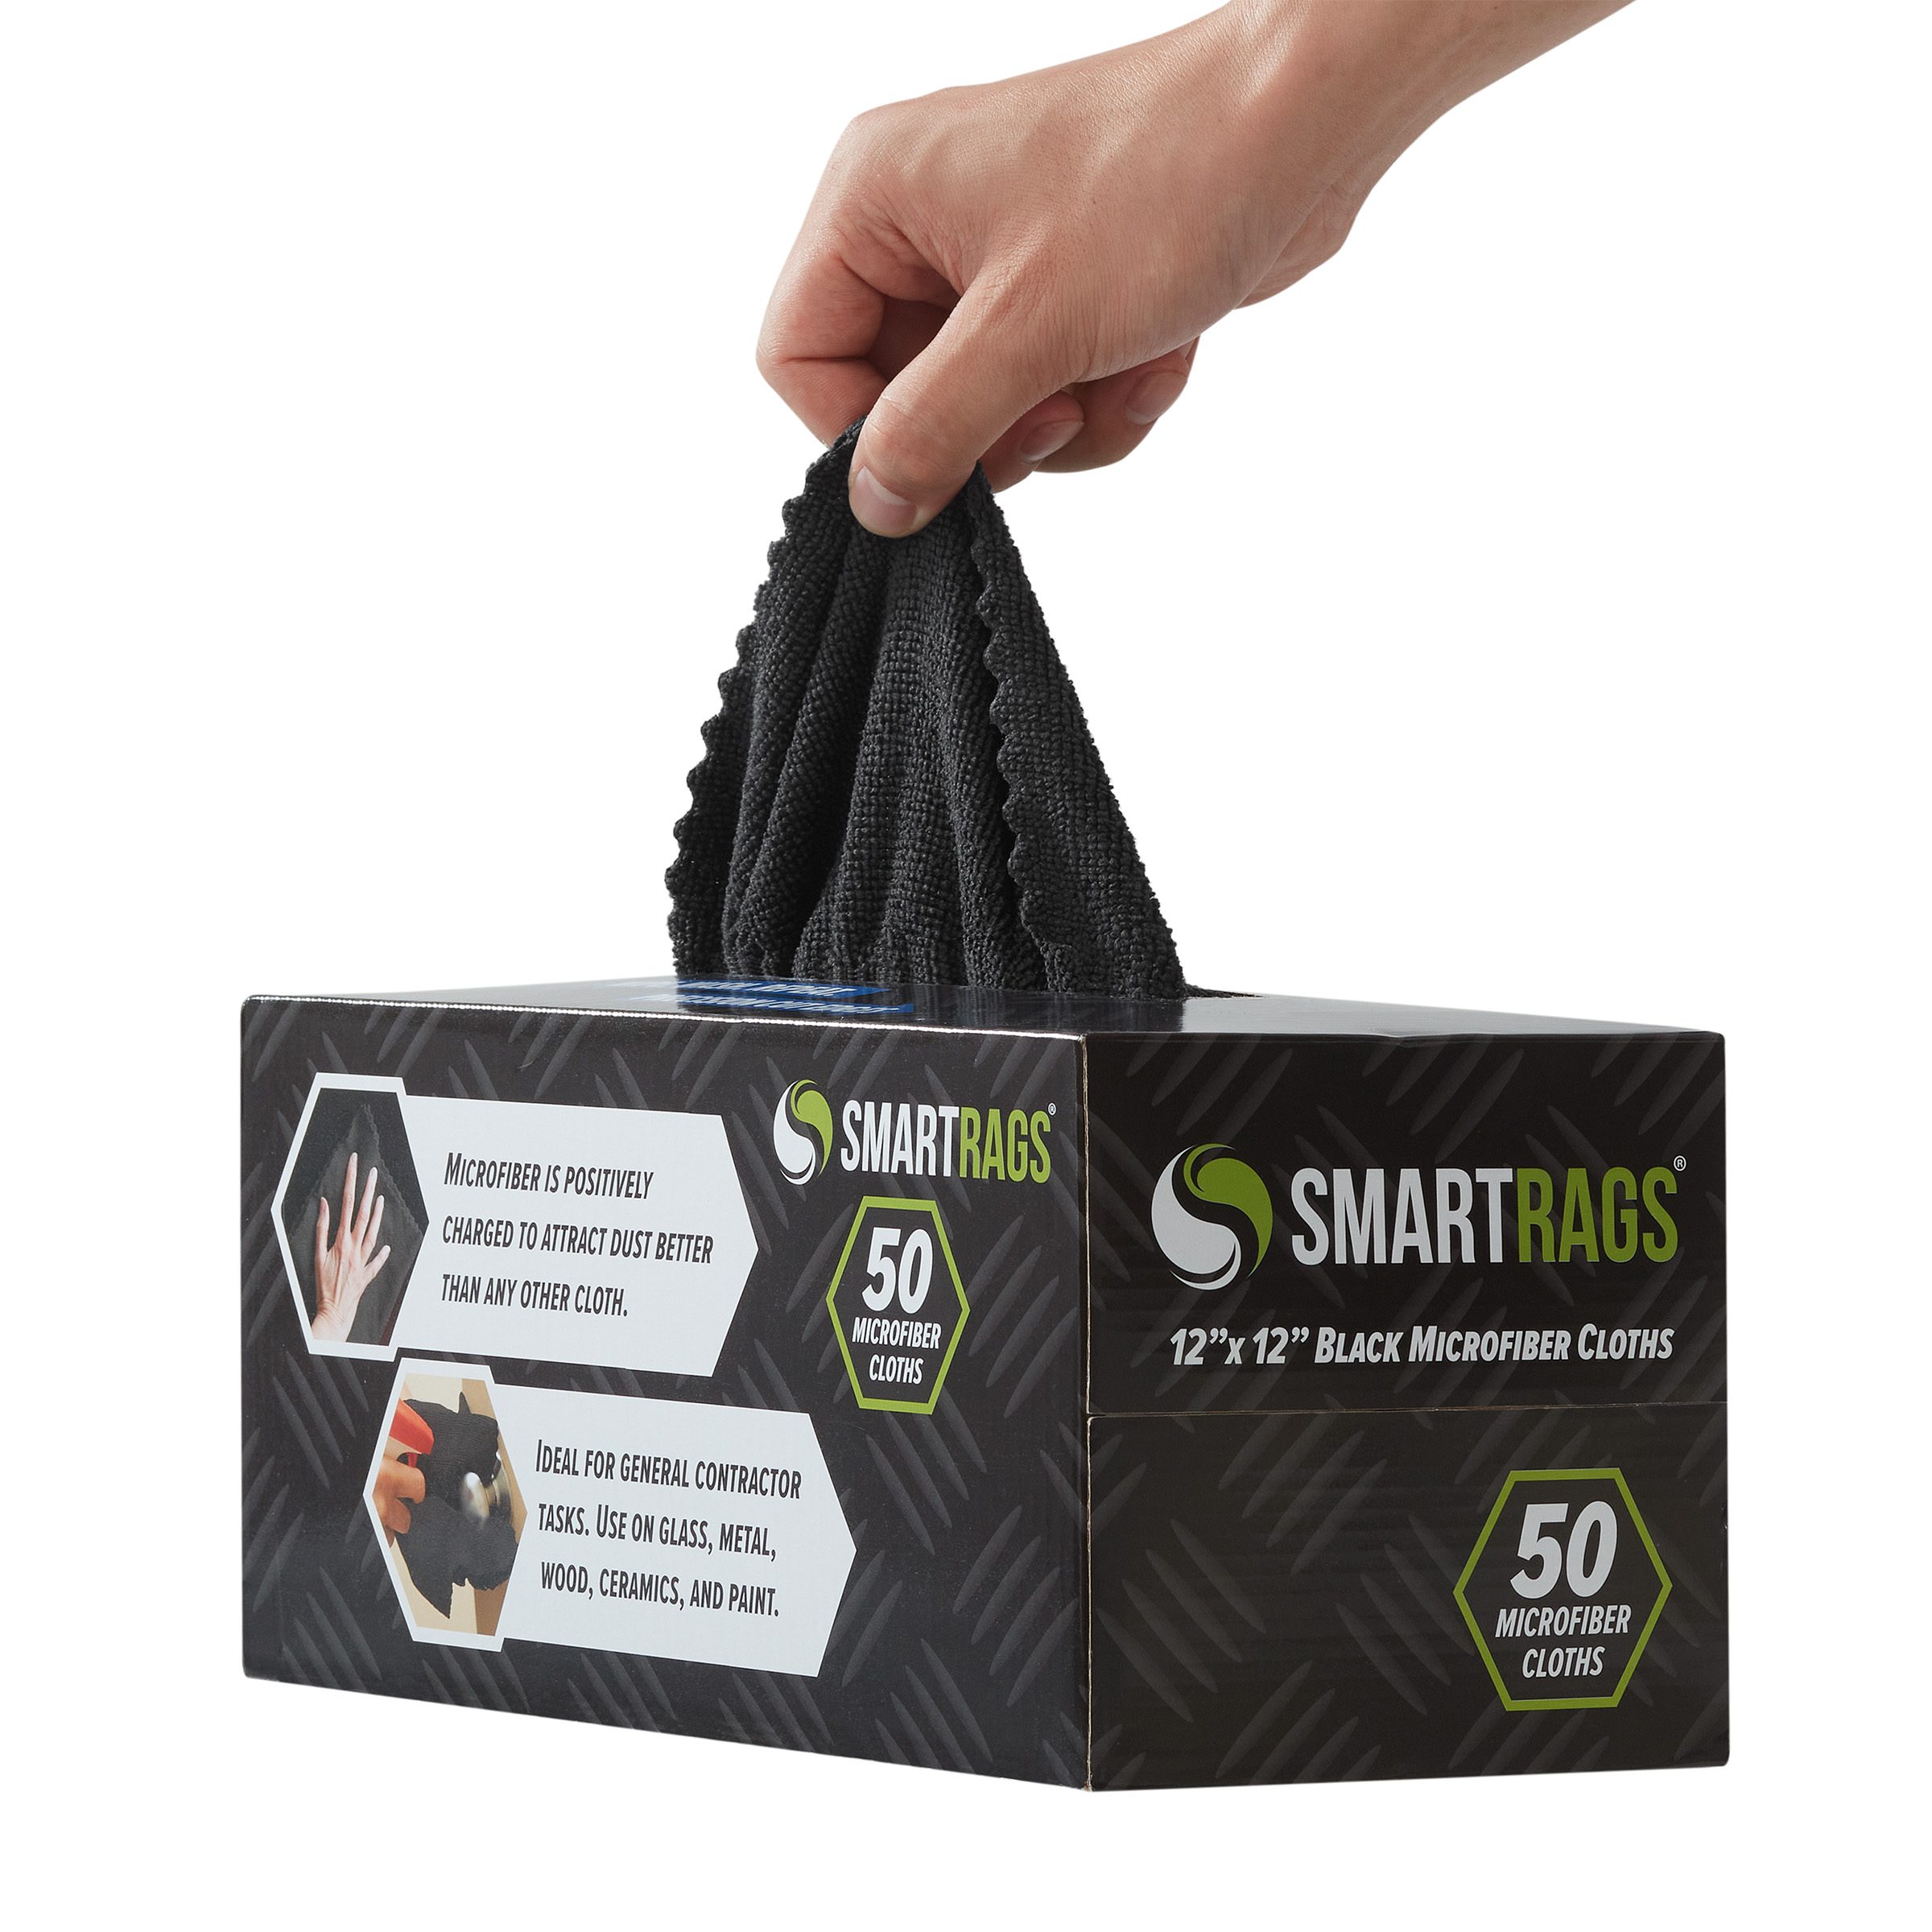 Microfiber Rag Bag - 50 Pack – Industrial Supply – Monarch Brands